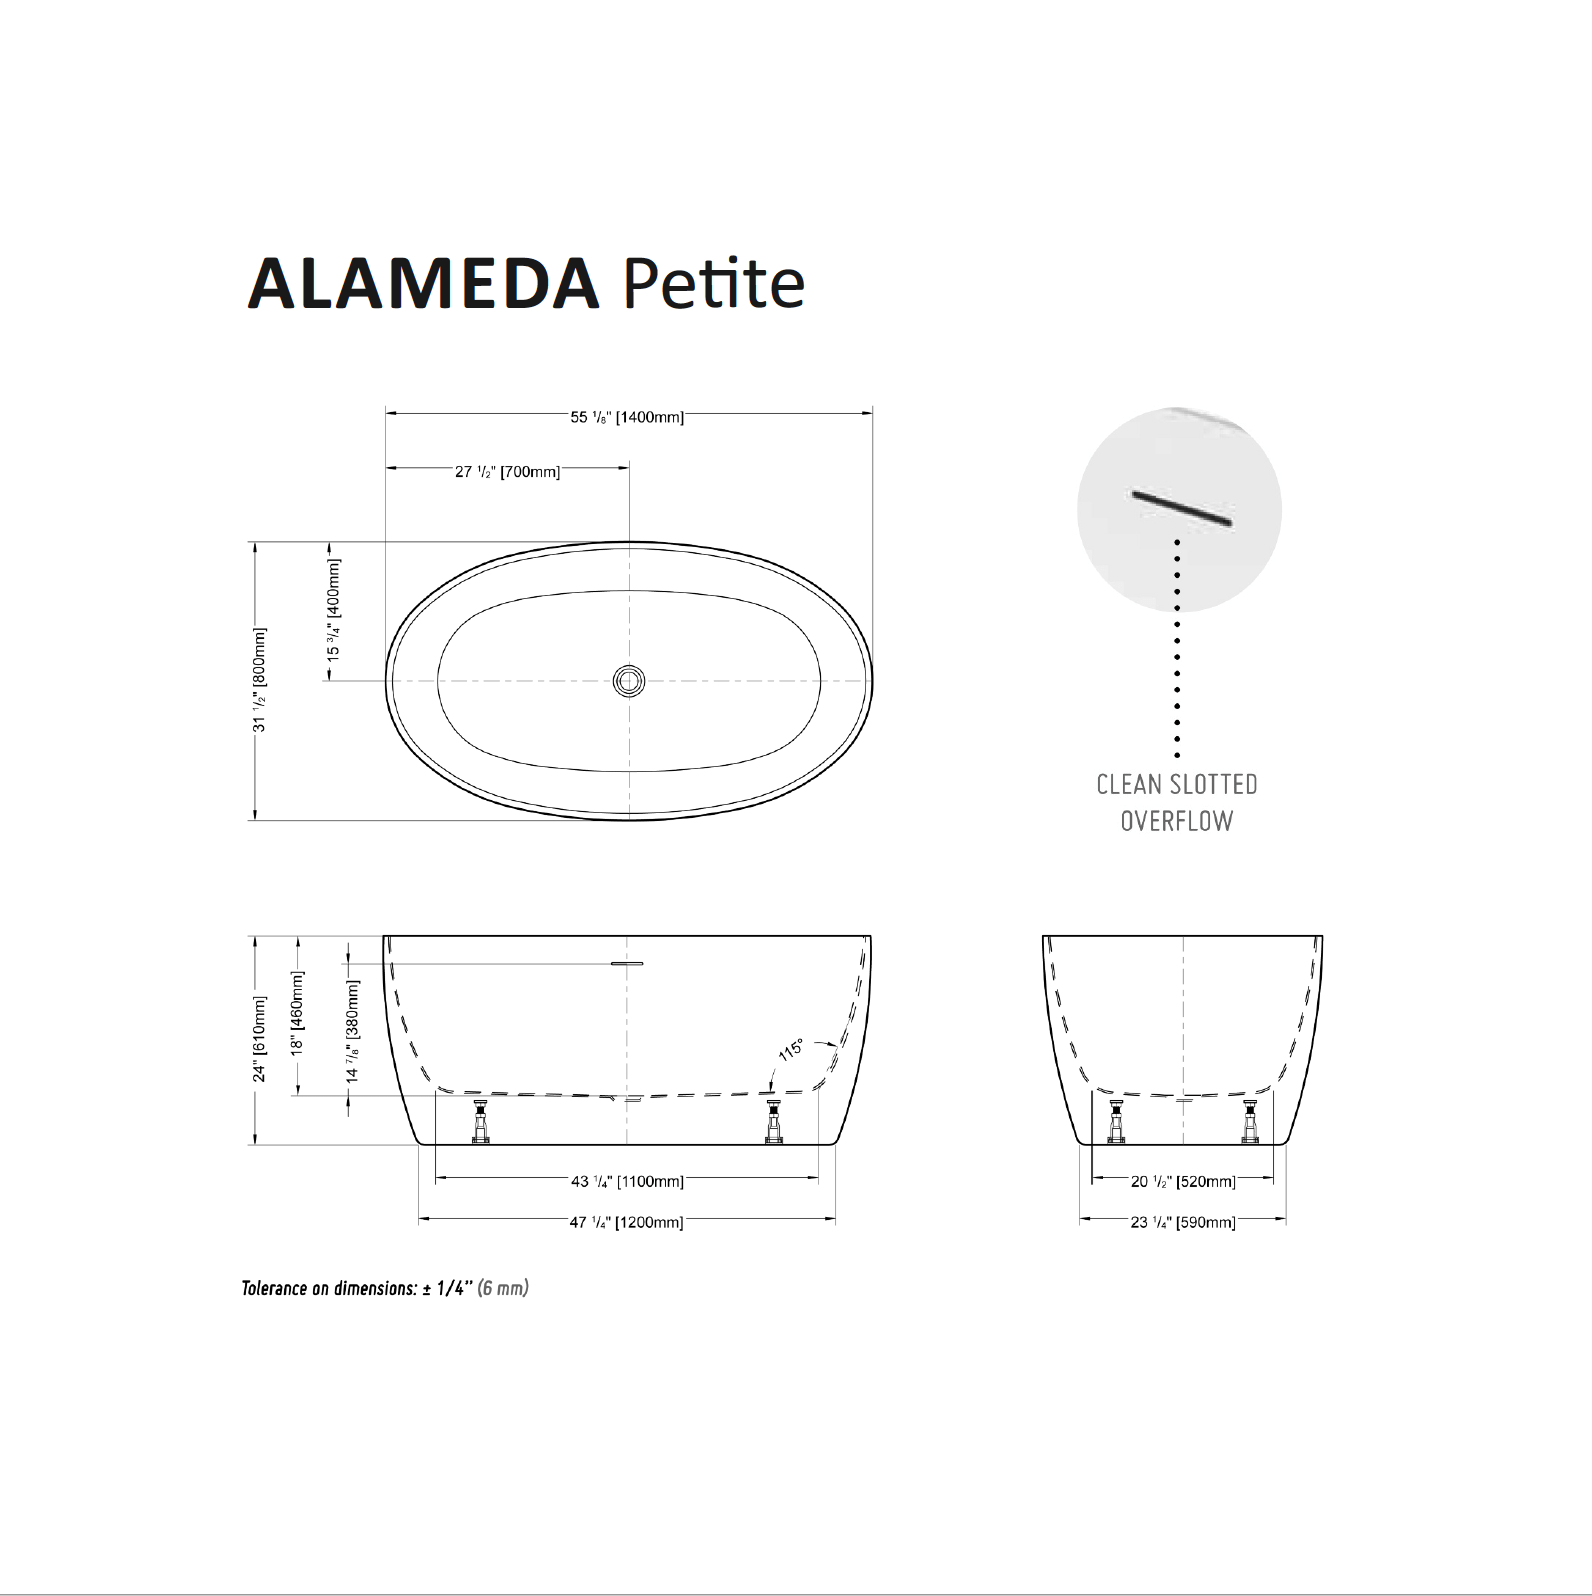 Alameda Petite Tub Specifications